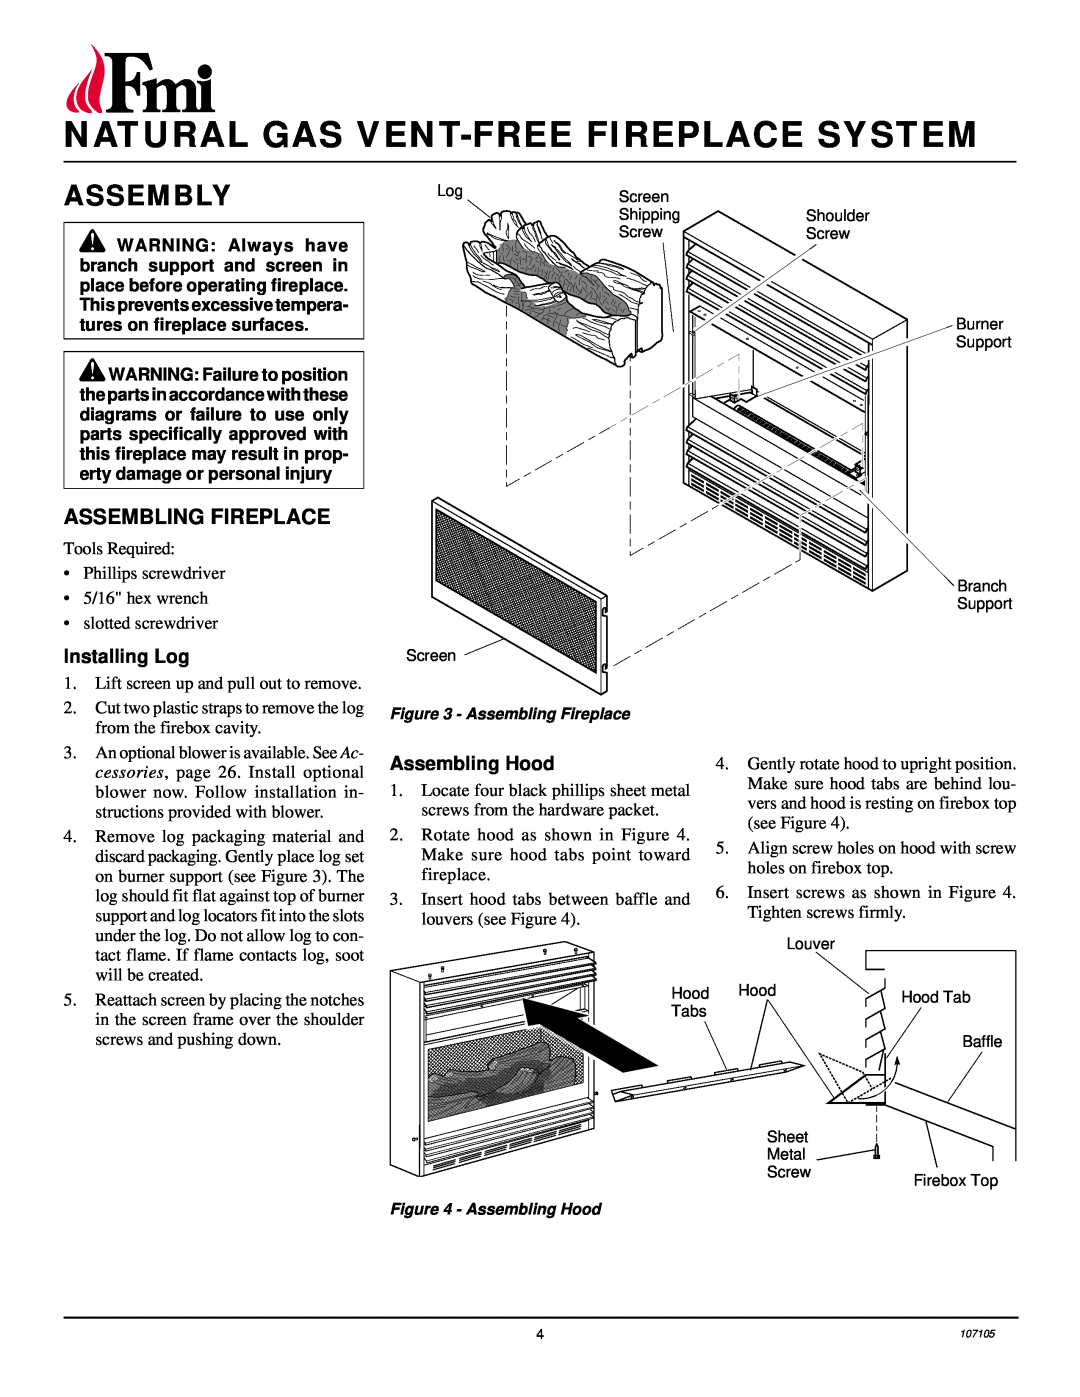 FMI FMH26TN Assembly, Assembling Fireplace, Installing Log, Assembling Hood, cessories, page 26. Install optional 